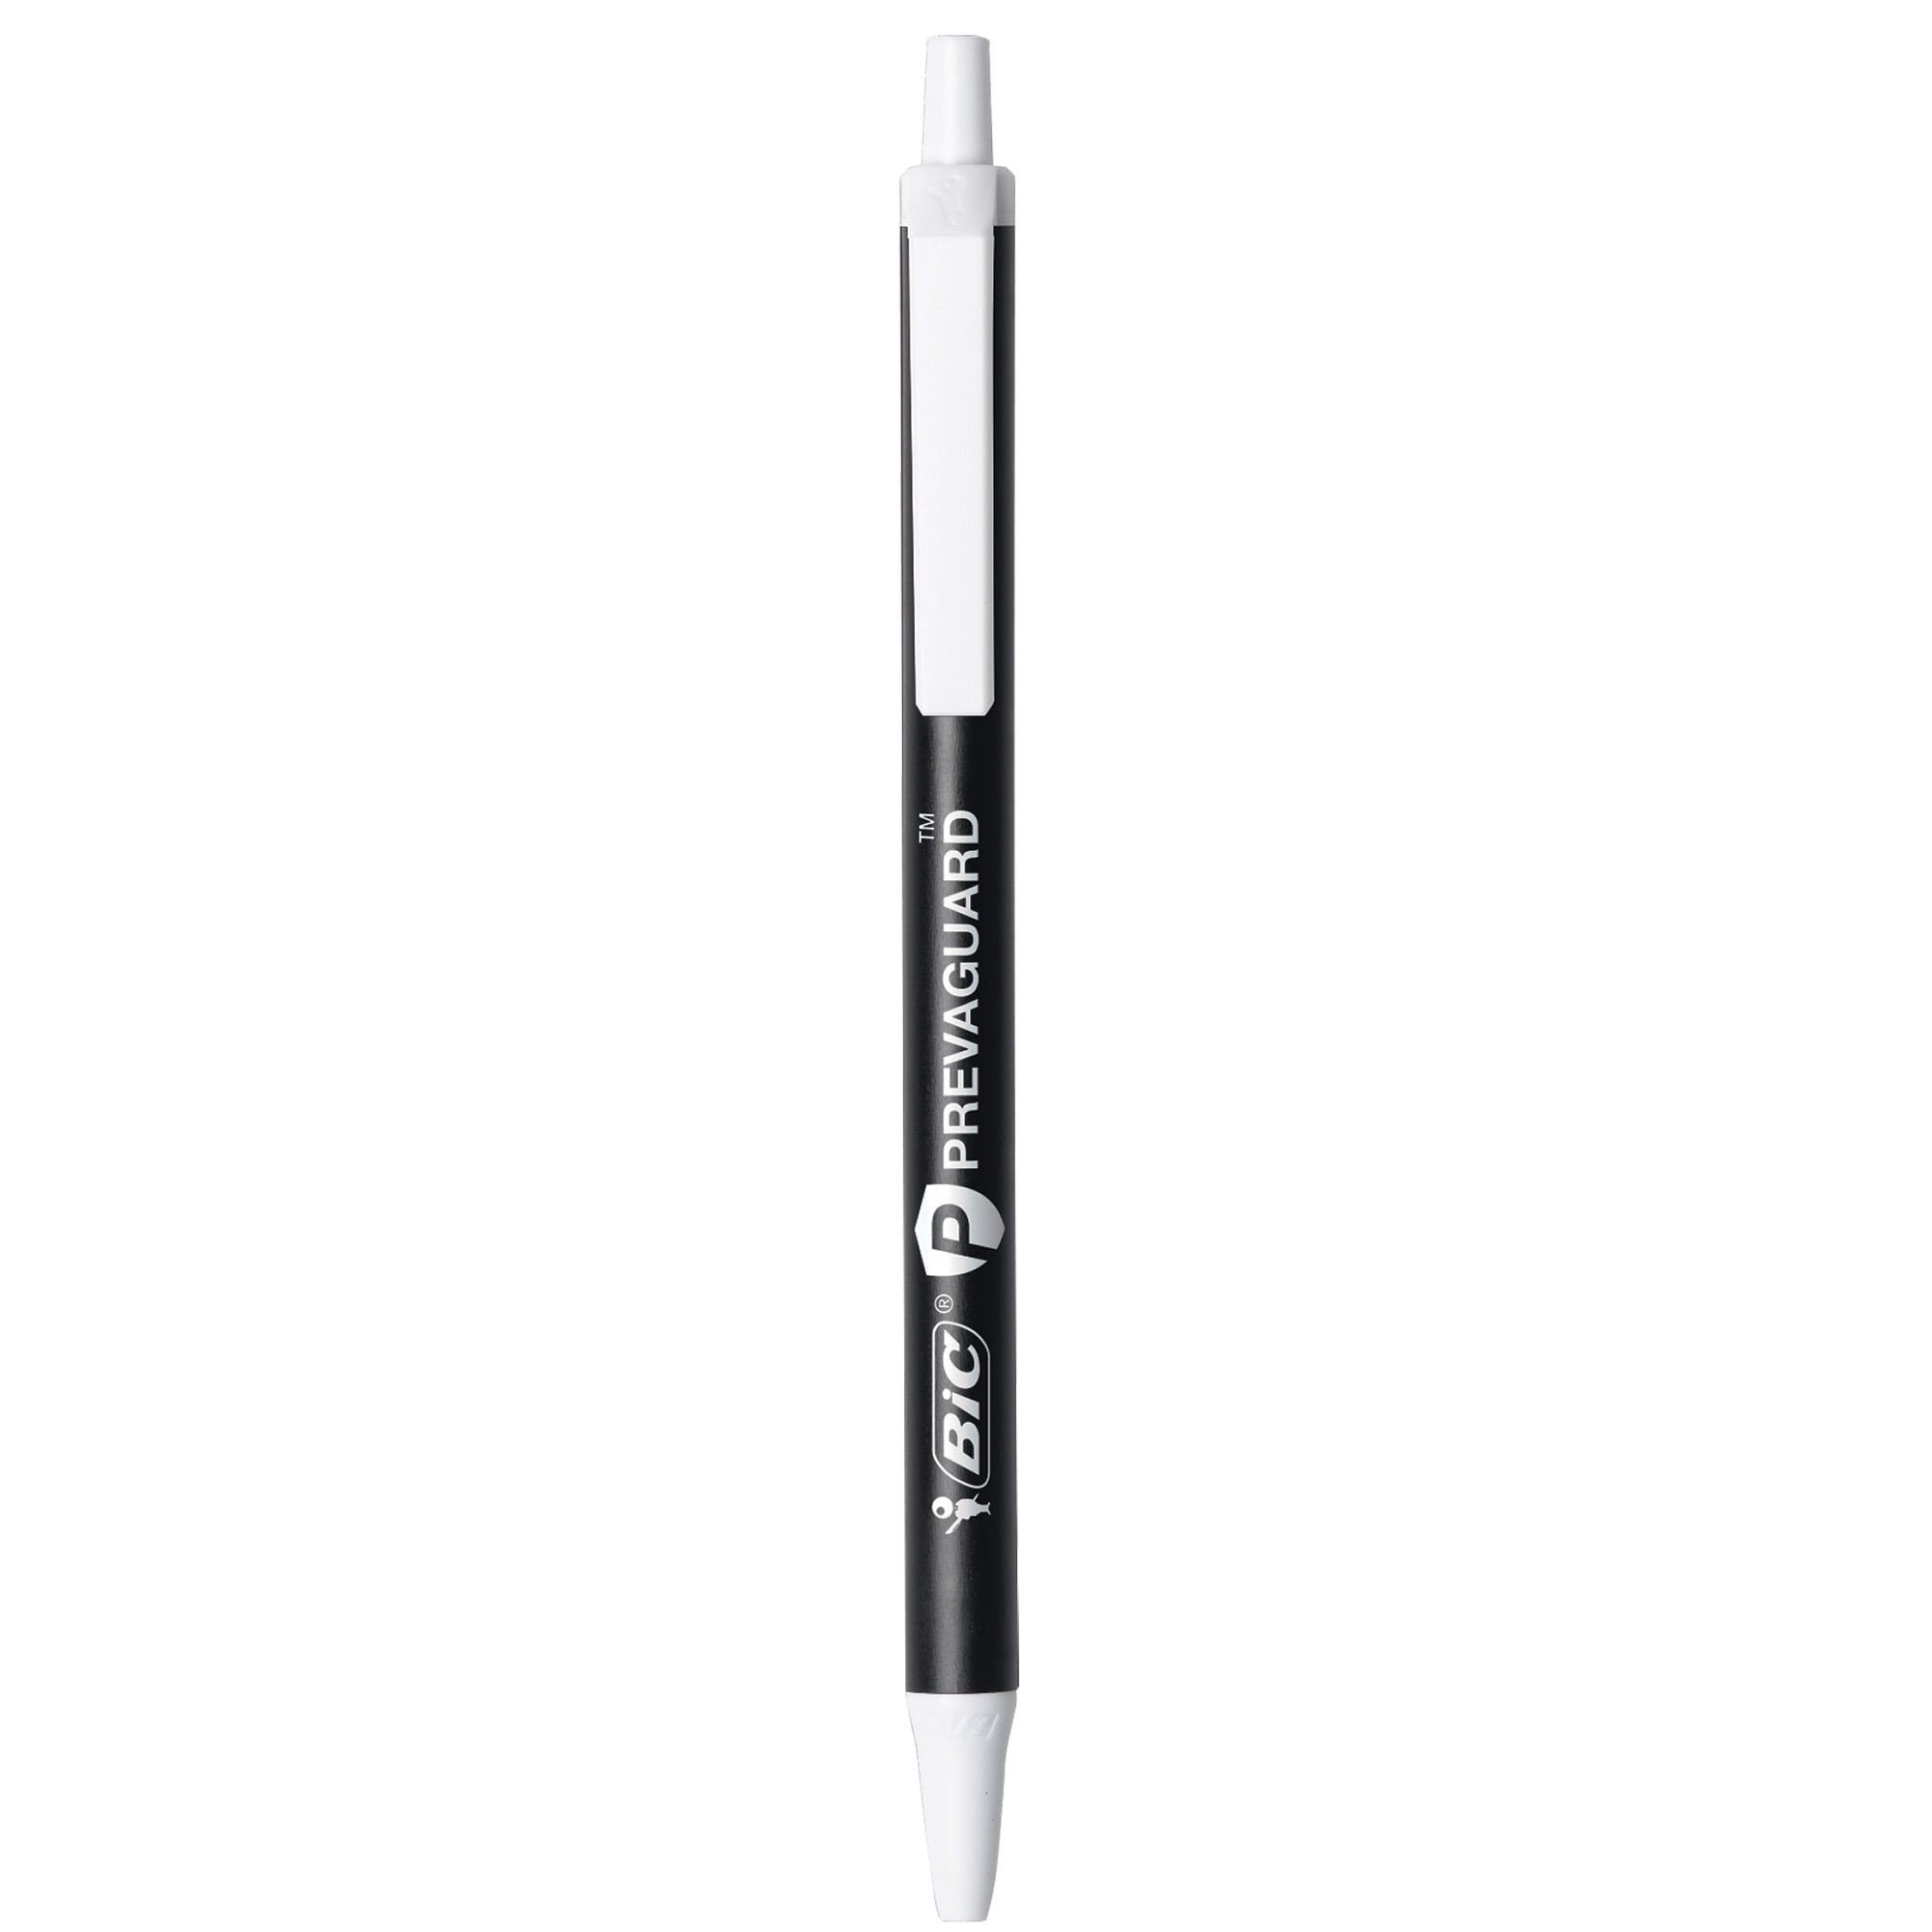 New BIC Prevaguard Clic Stic Pens 12 Pack Black Medium Ball Antimicrobial